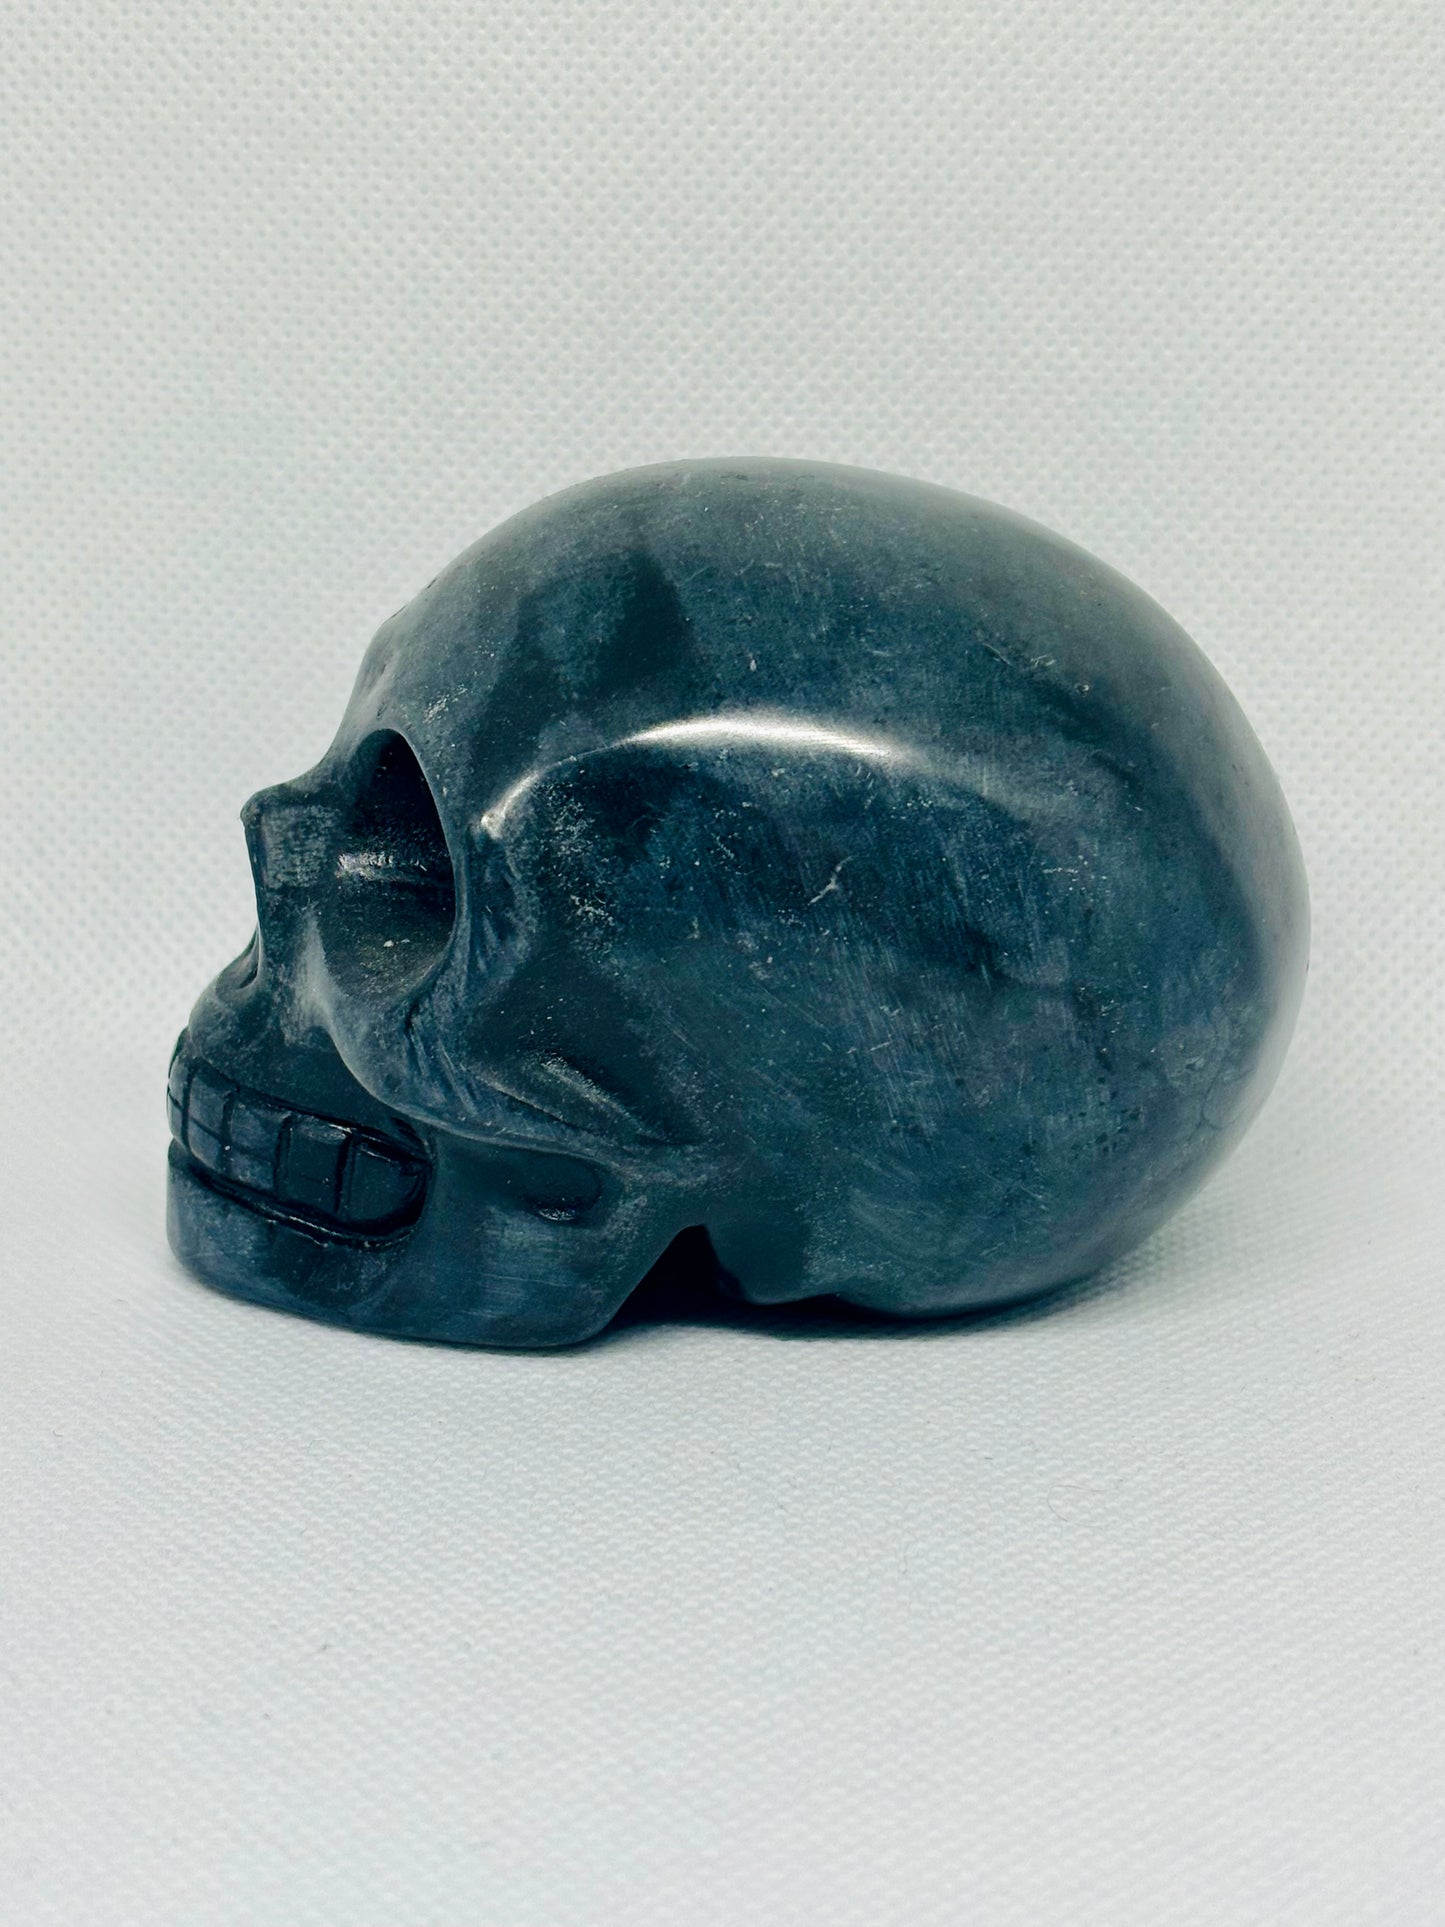 Carved Crystal Skull 1.1lb #BO